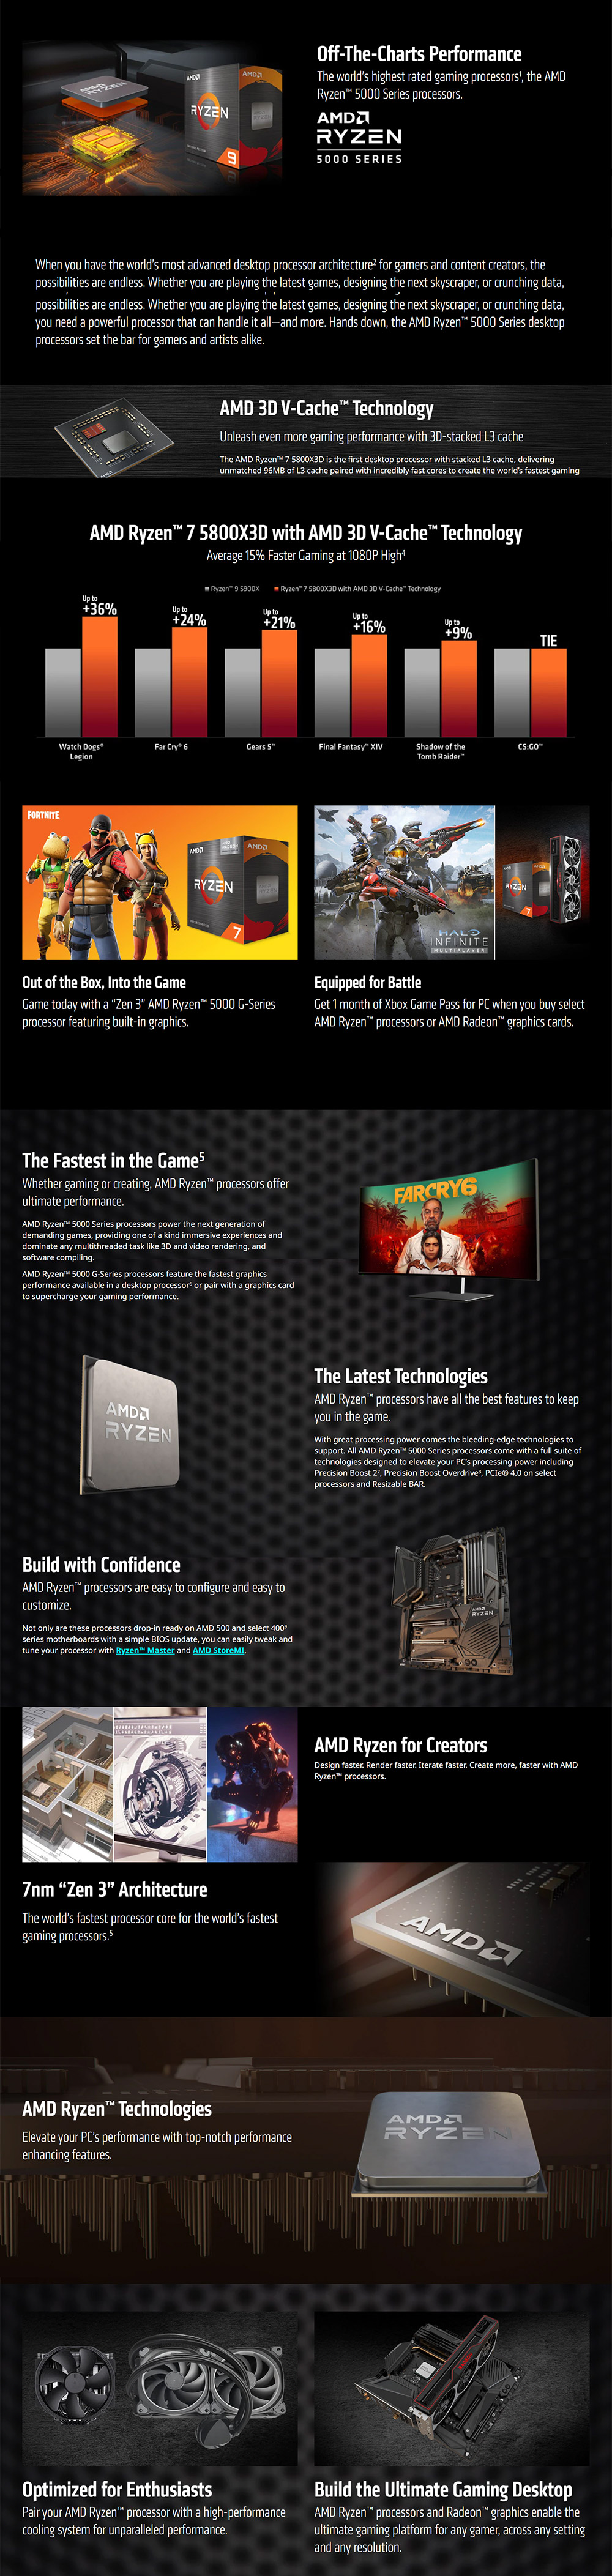 AMD Ryzen 5 AM4 5600 6 Core CPU With Wraith Cooler 